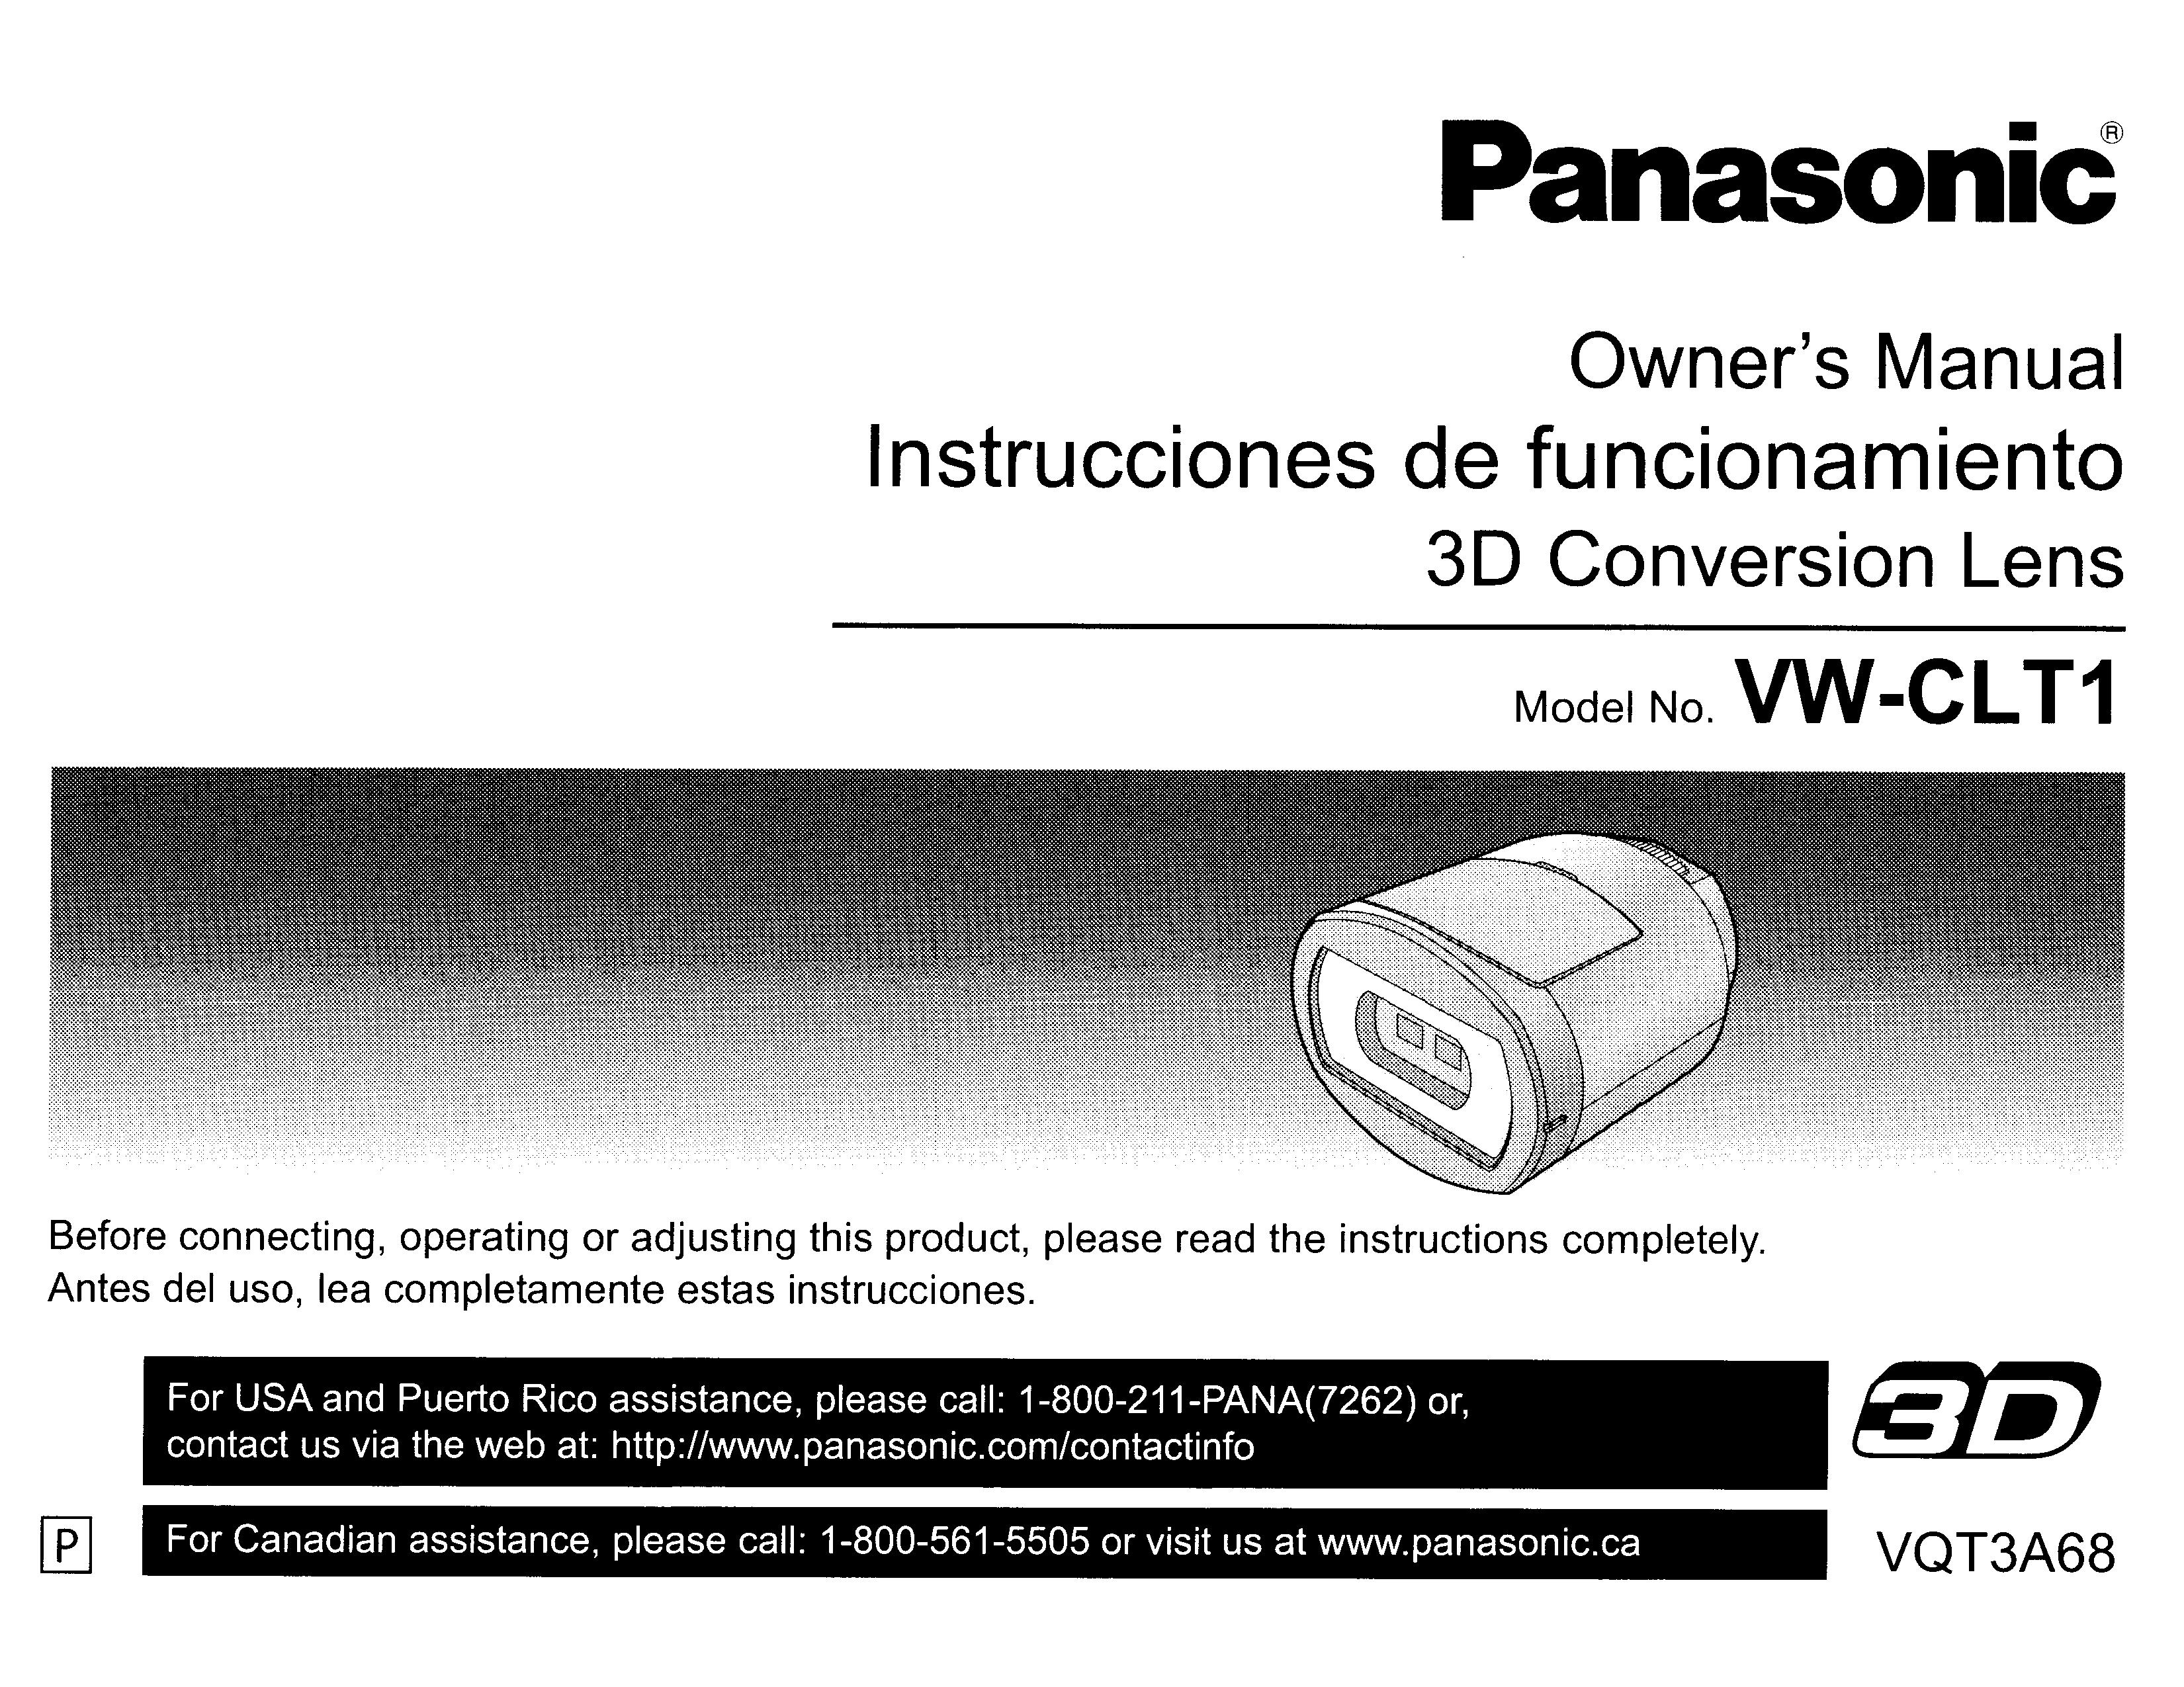 Panasonic vw-clt1 Camera Lens User Manual